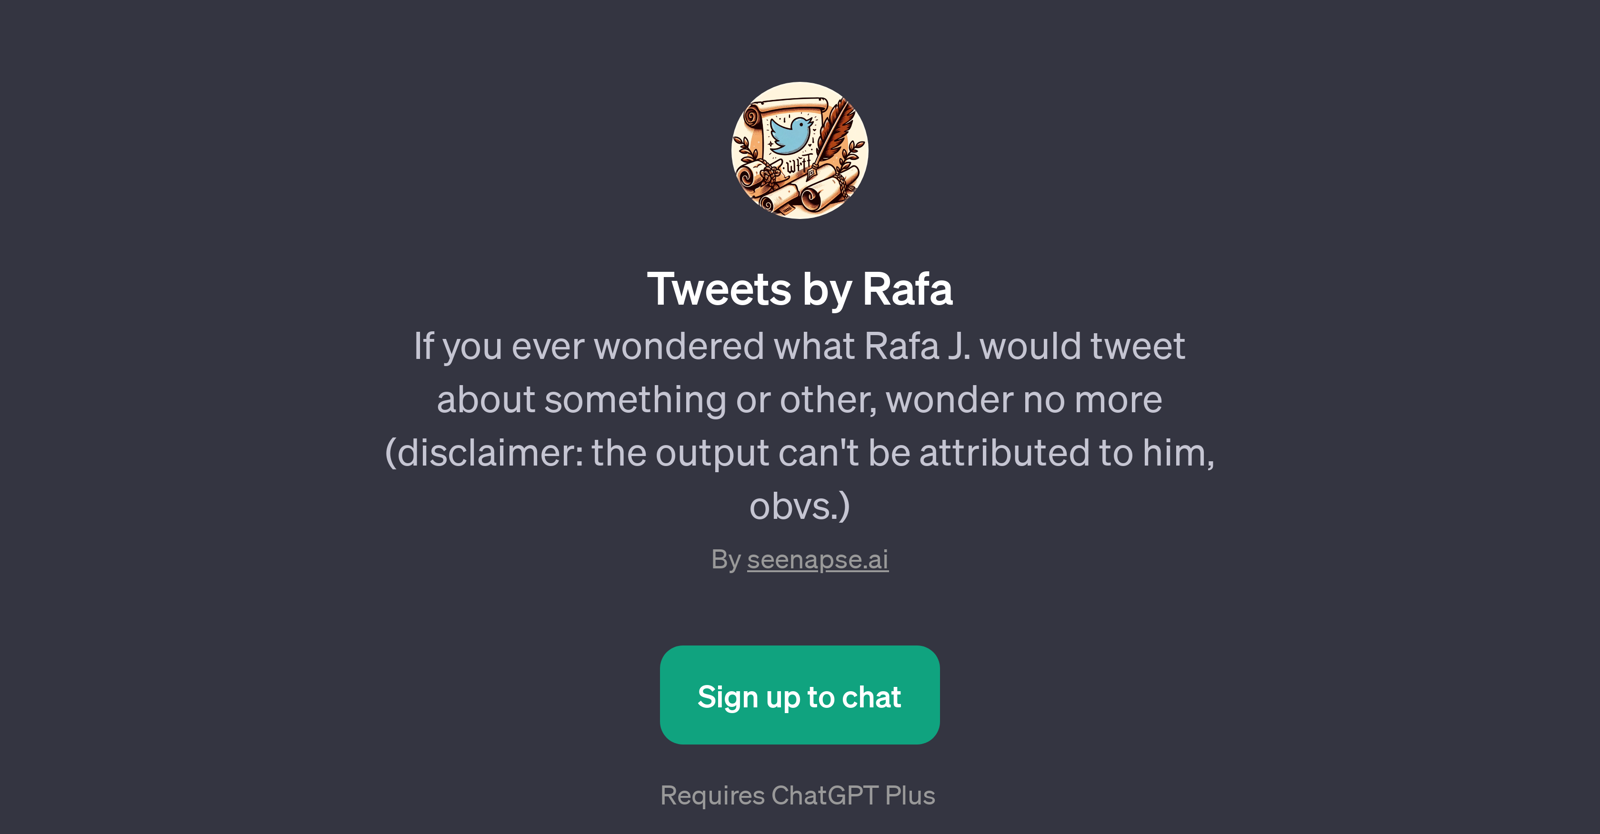 Tweets by Rafa website